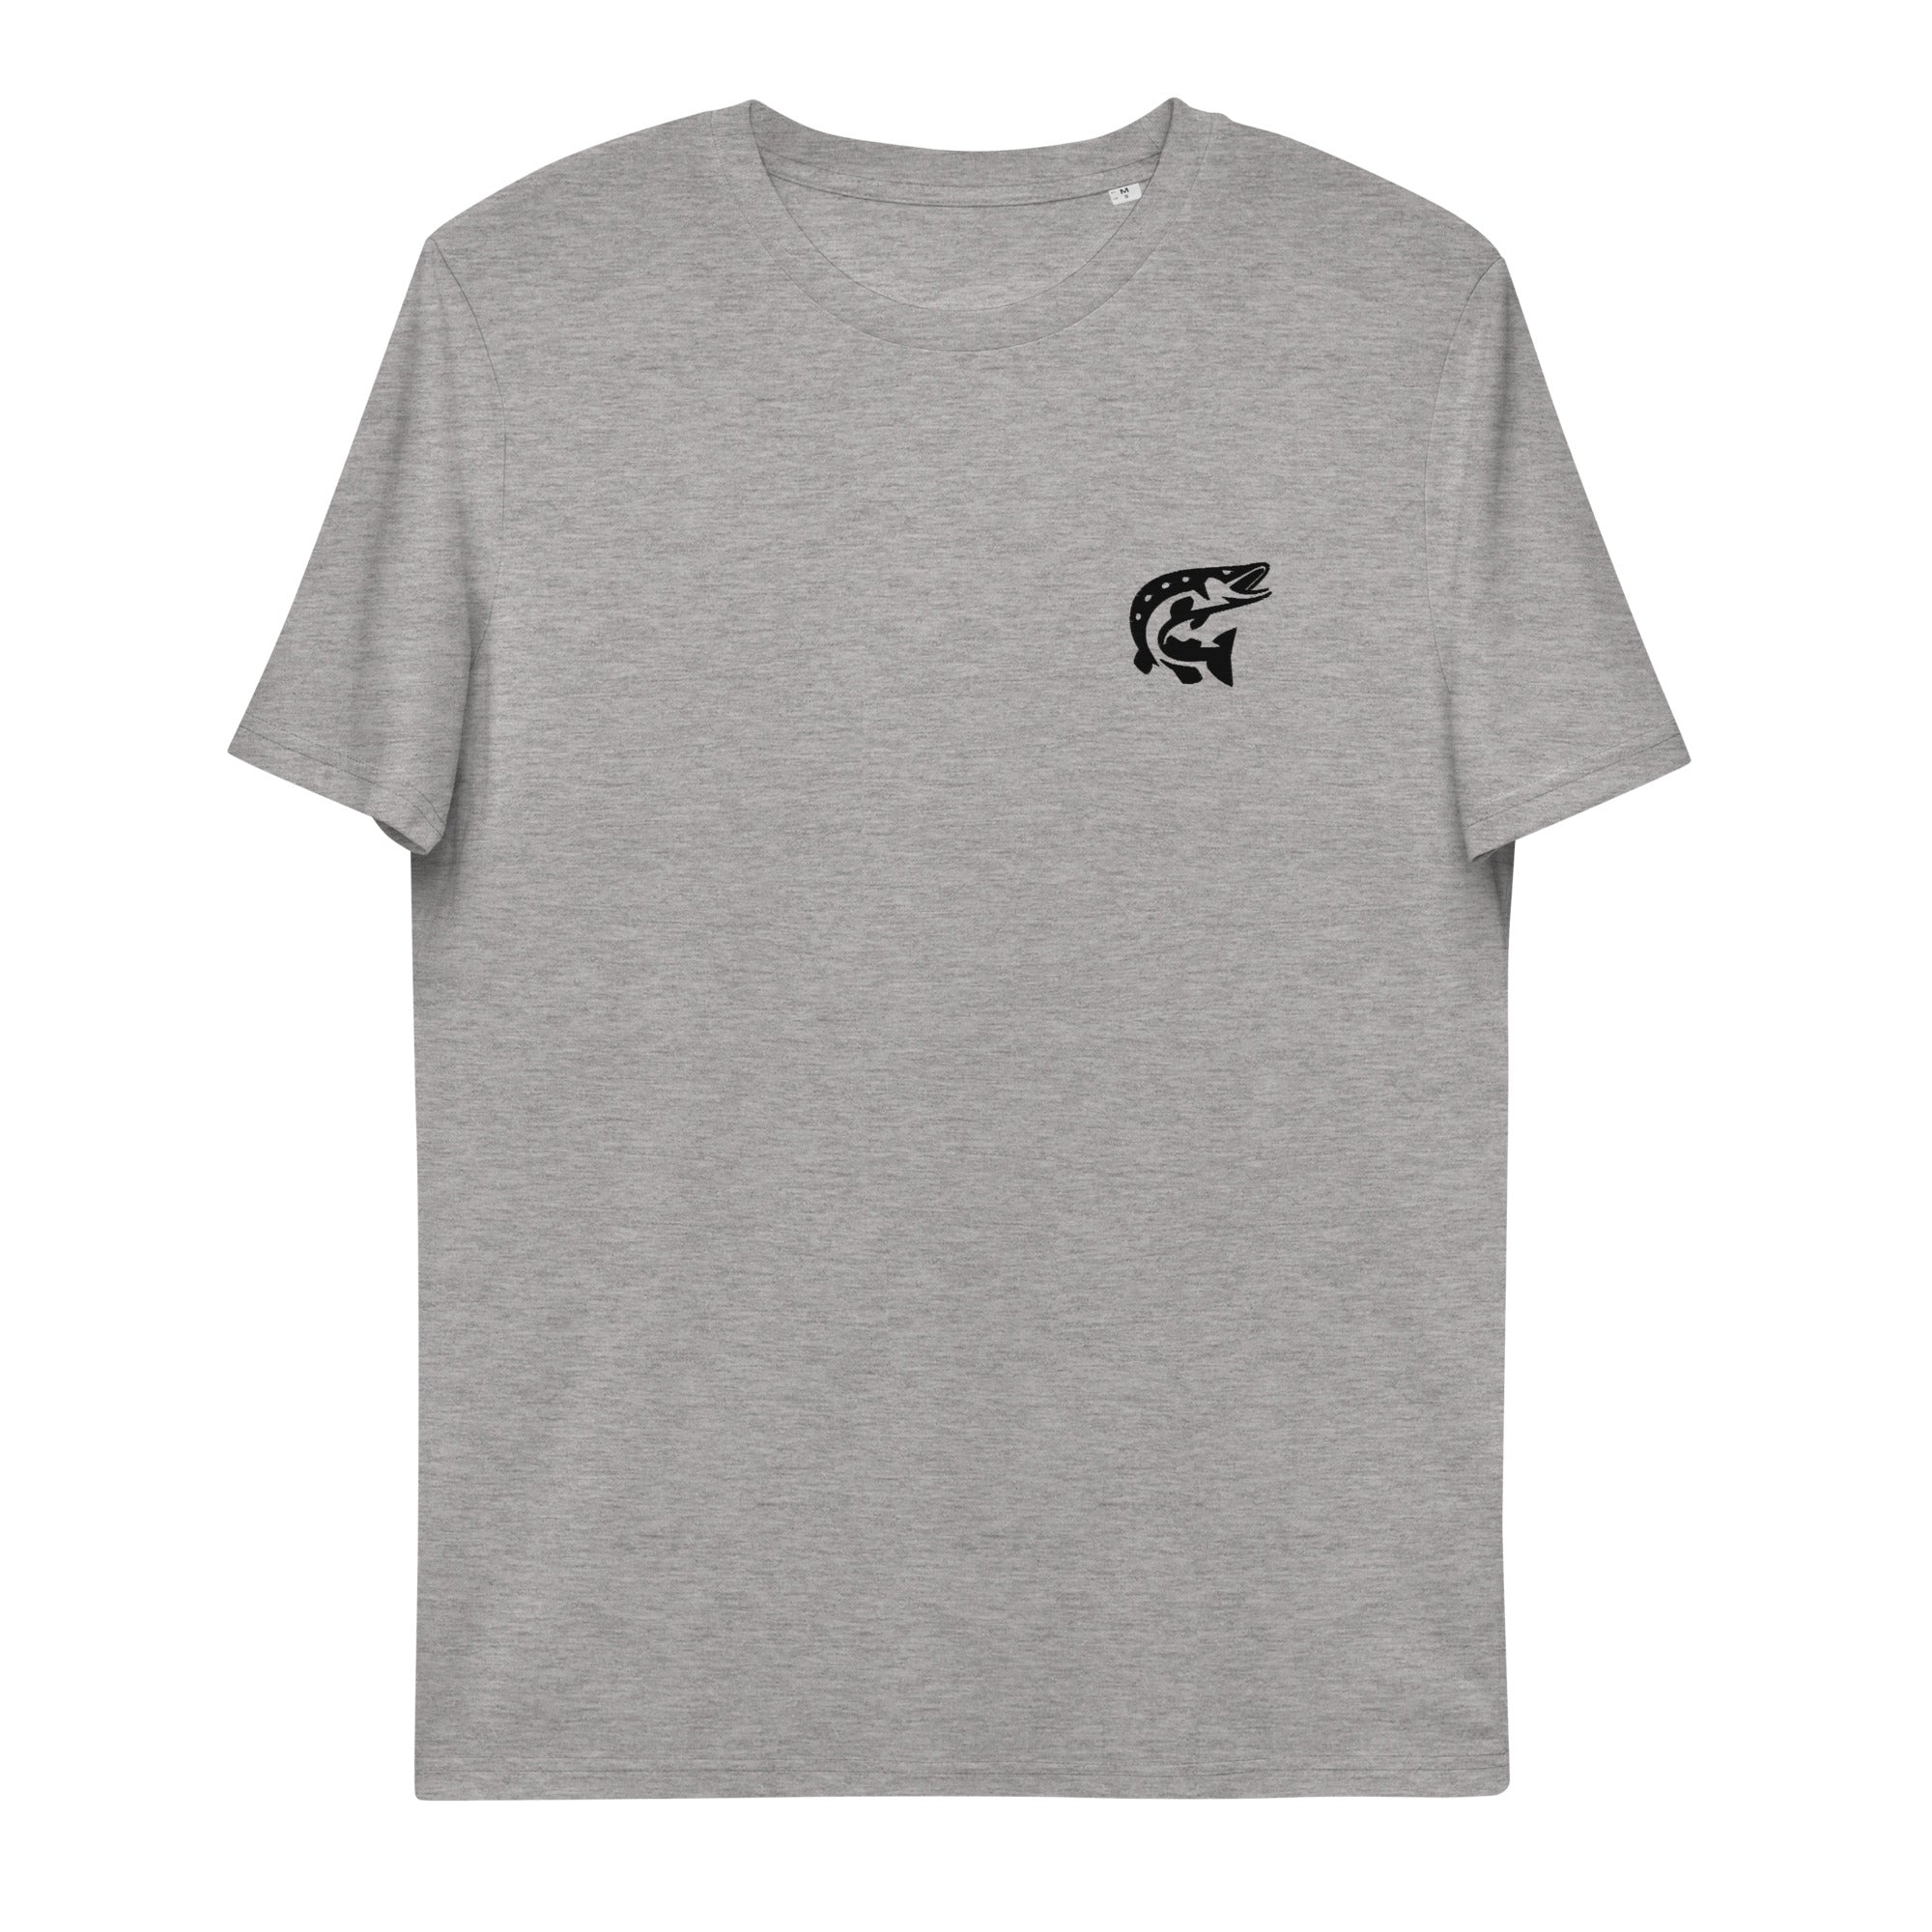 Left Swoosh Pike T-shirt - Oddhook